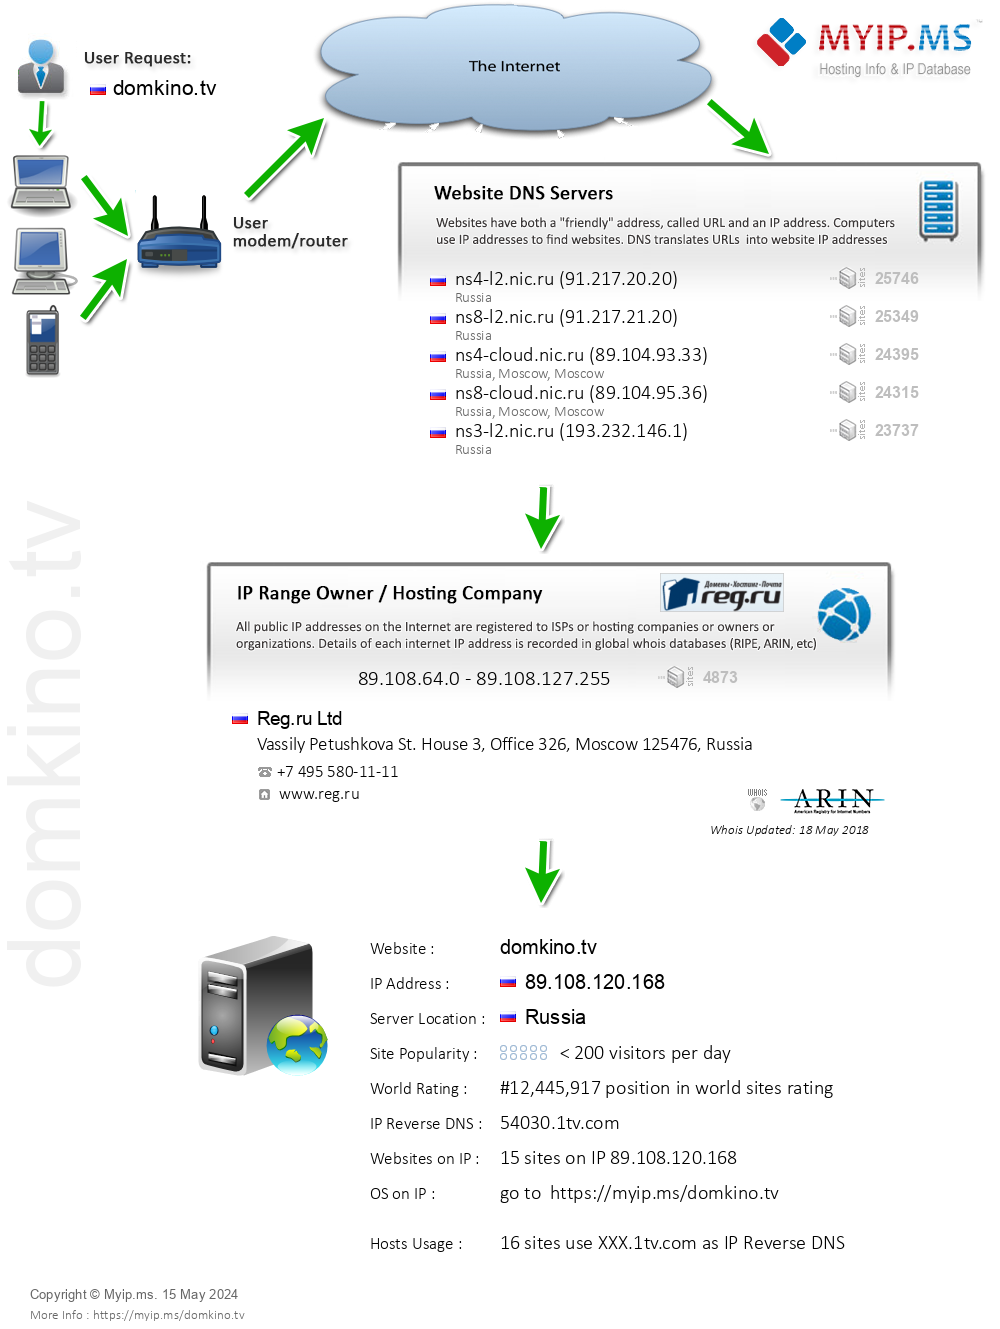 Domkino.tv - Website Hosting Visual IP Diagram